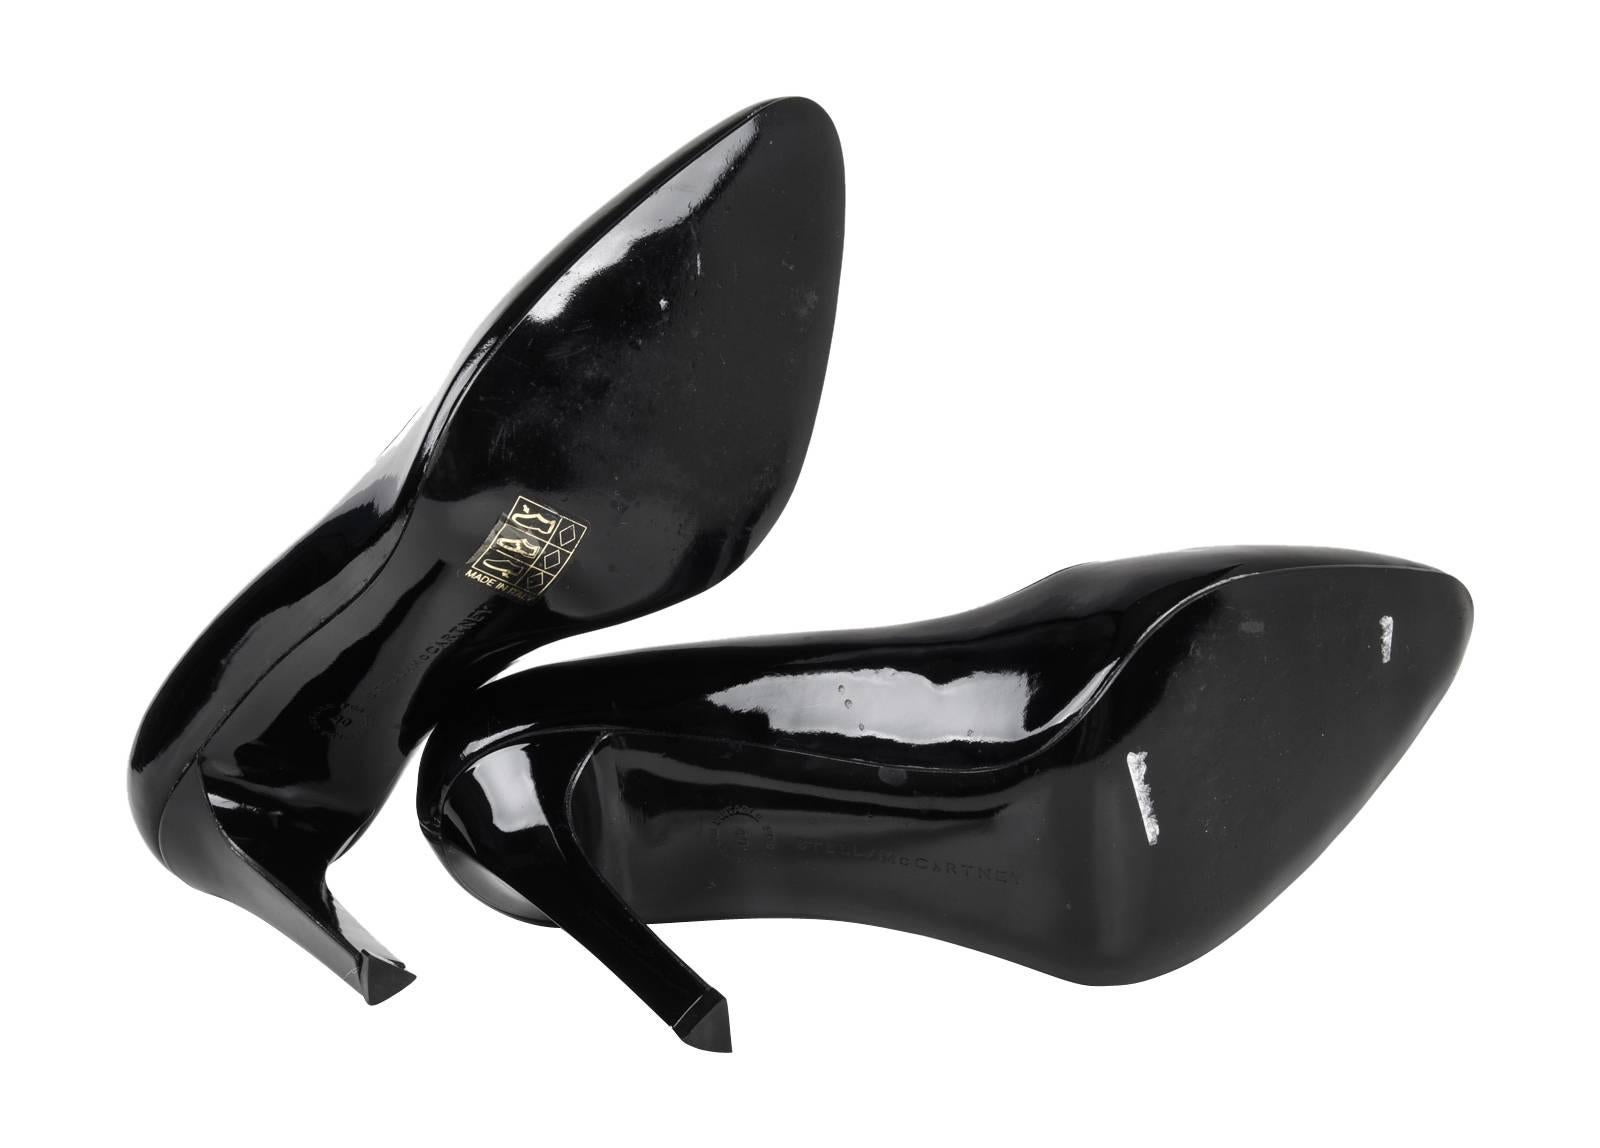 Stella McCartney Shoe Black Patent Leather Morgana Pump 40 / 10 New 3